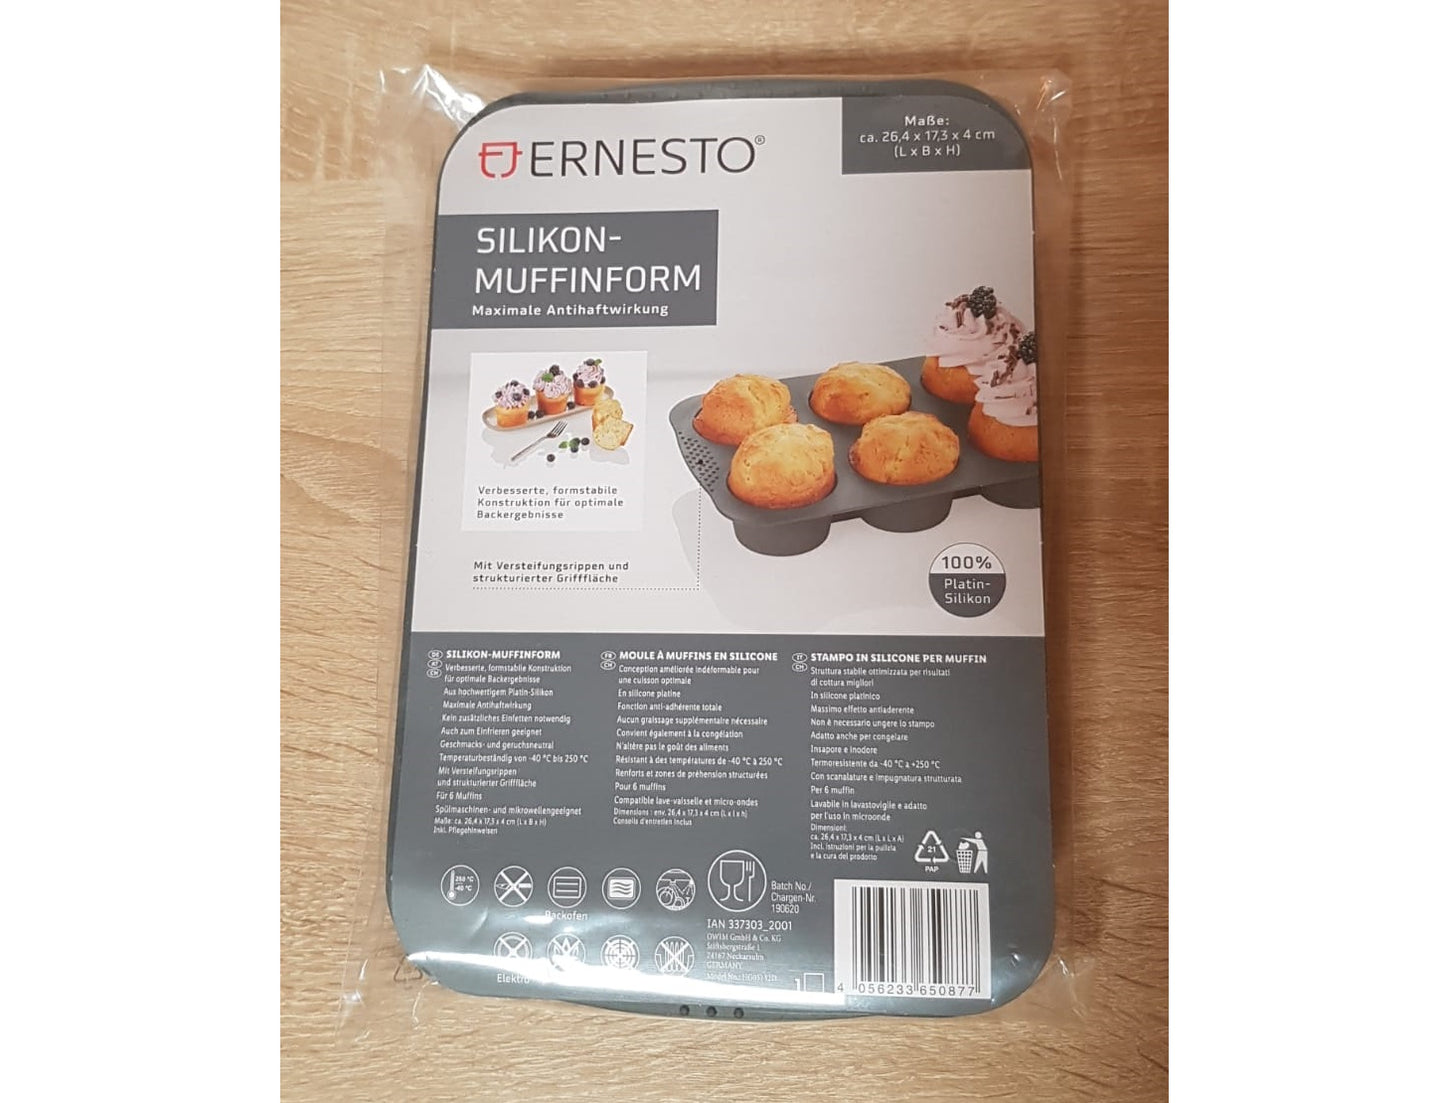 6er Silikon Muffinform - Backformen Förmchen Muffin Antihaftwirkung Ernesto®